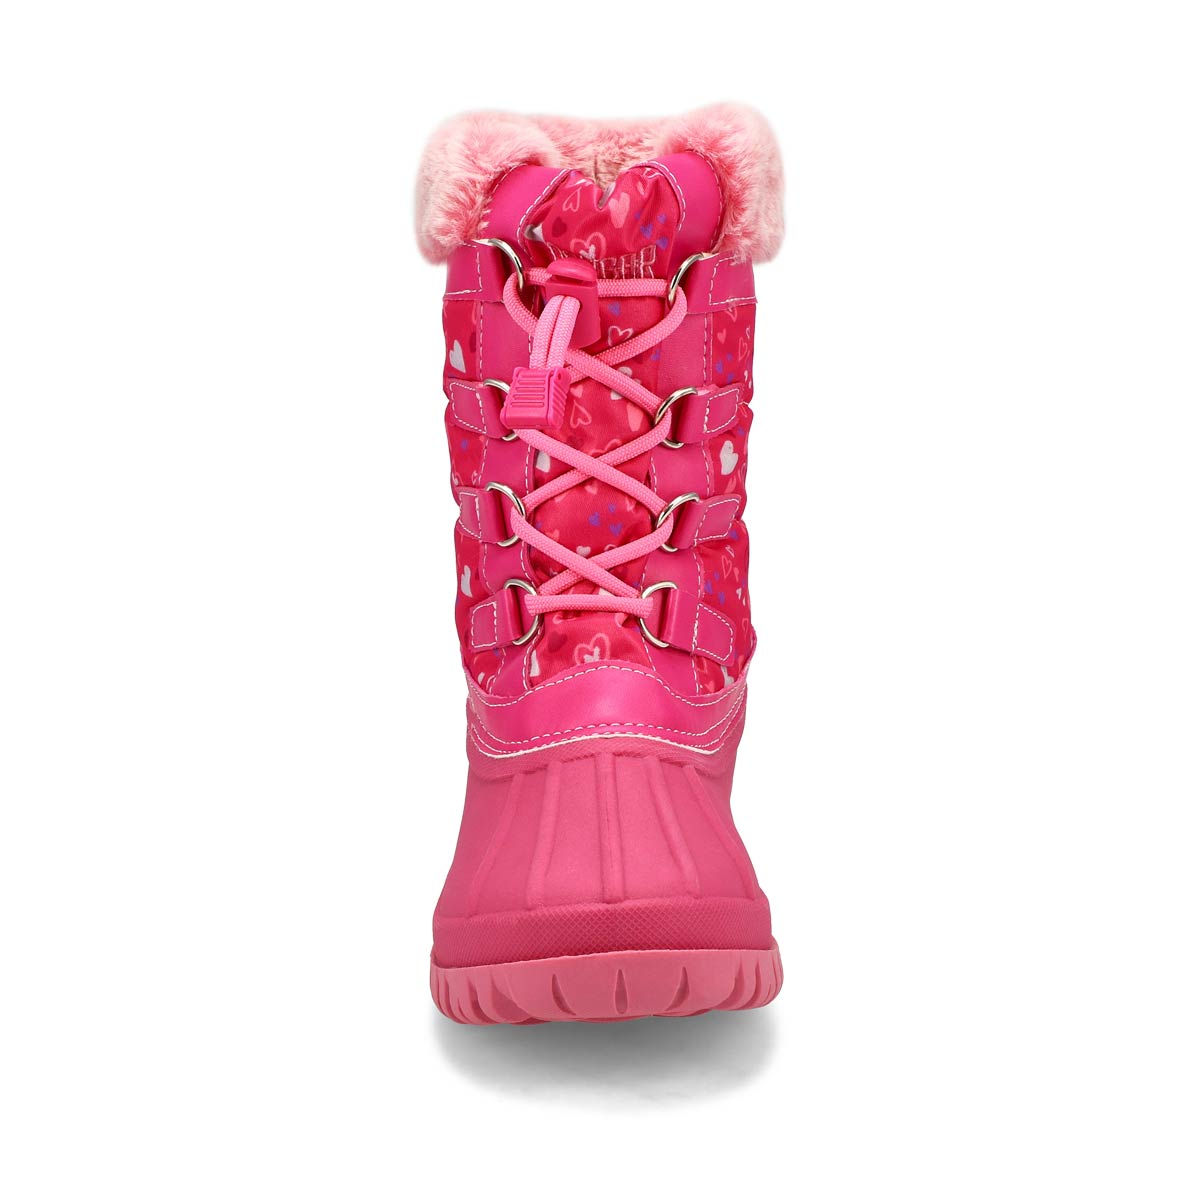 Girls' Cece Waterproof Winter Boot- Pink